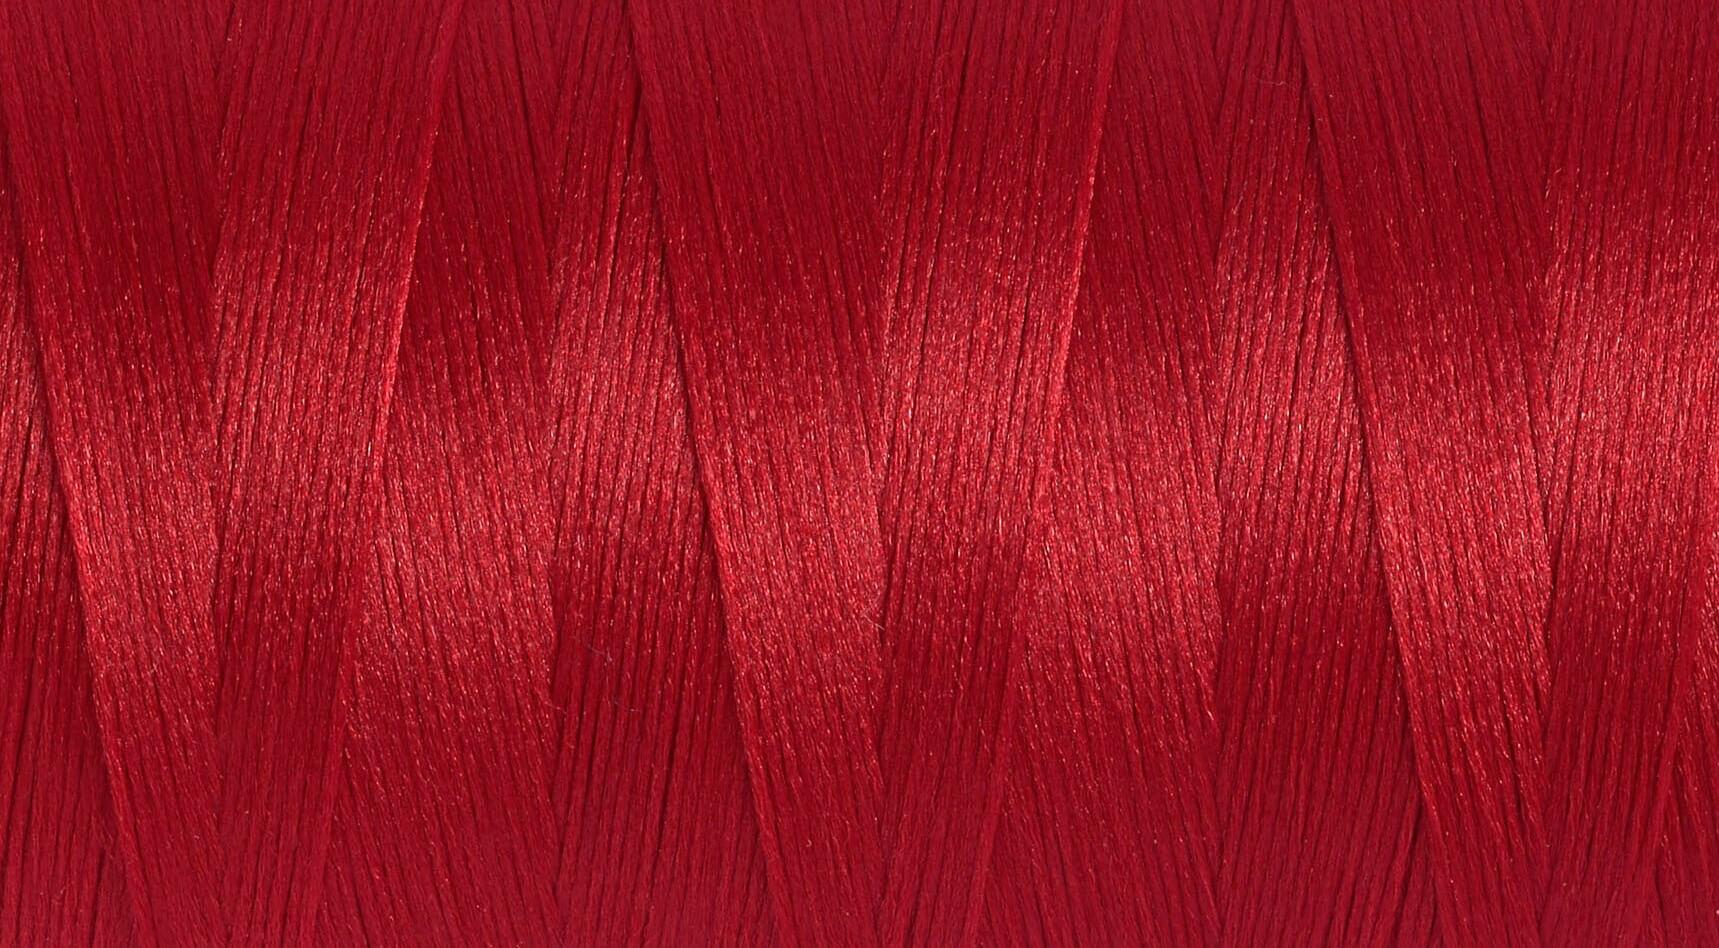 Gutermann Bulky-lock 160 2000m overlocking thread in colour number 156 Crimson Red